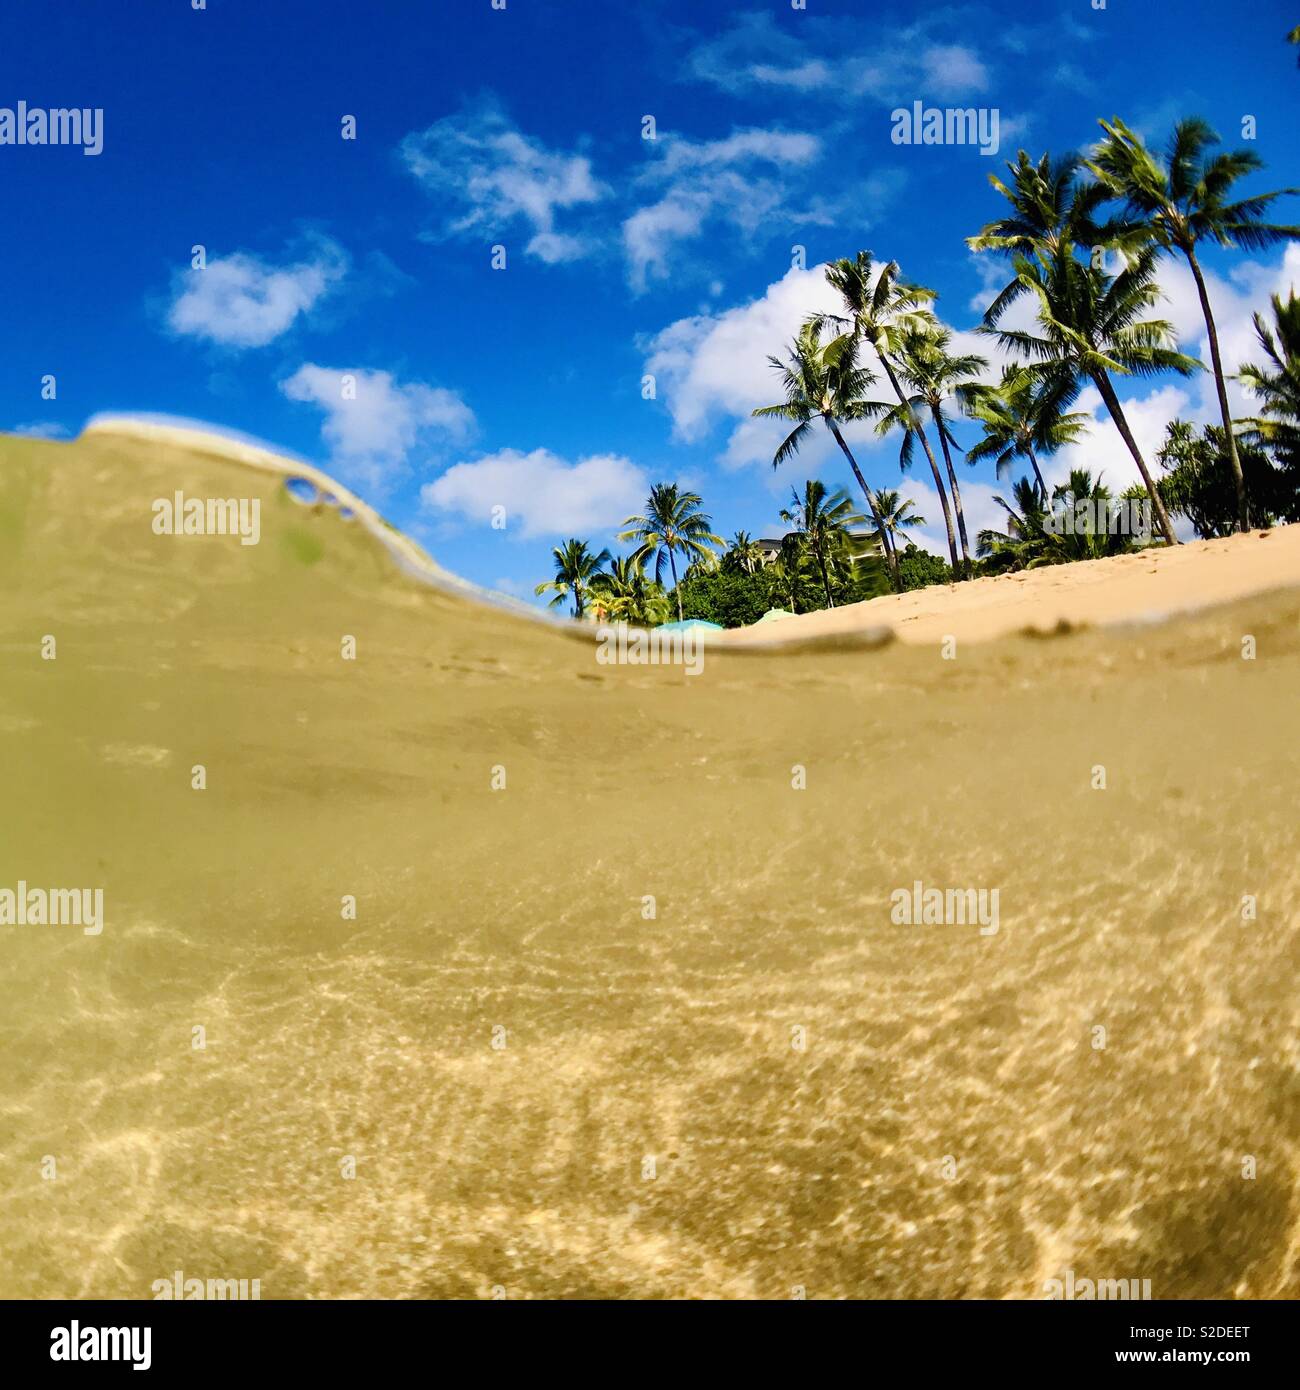 Over under in the ocean of palm trees on the beach. Hanalei, Kauai, Hawaii. Stock Photo